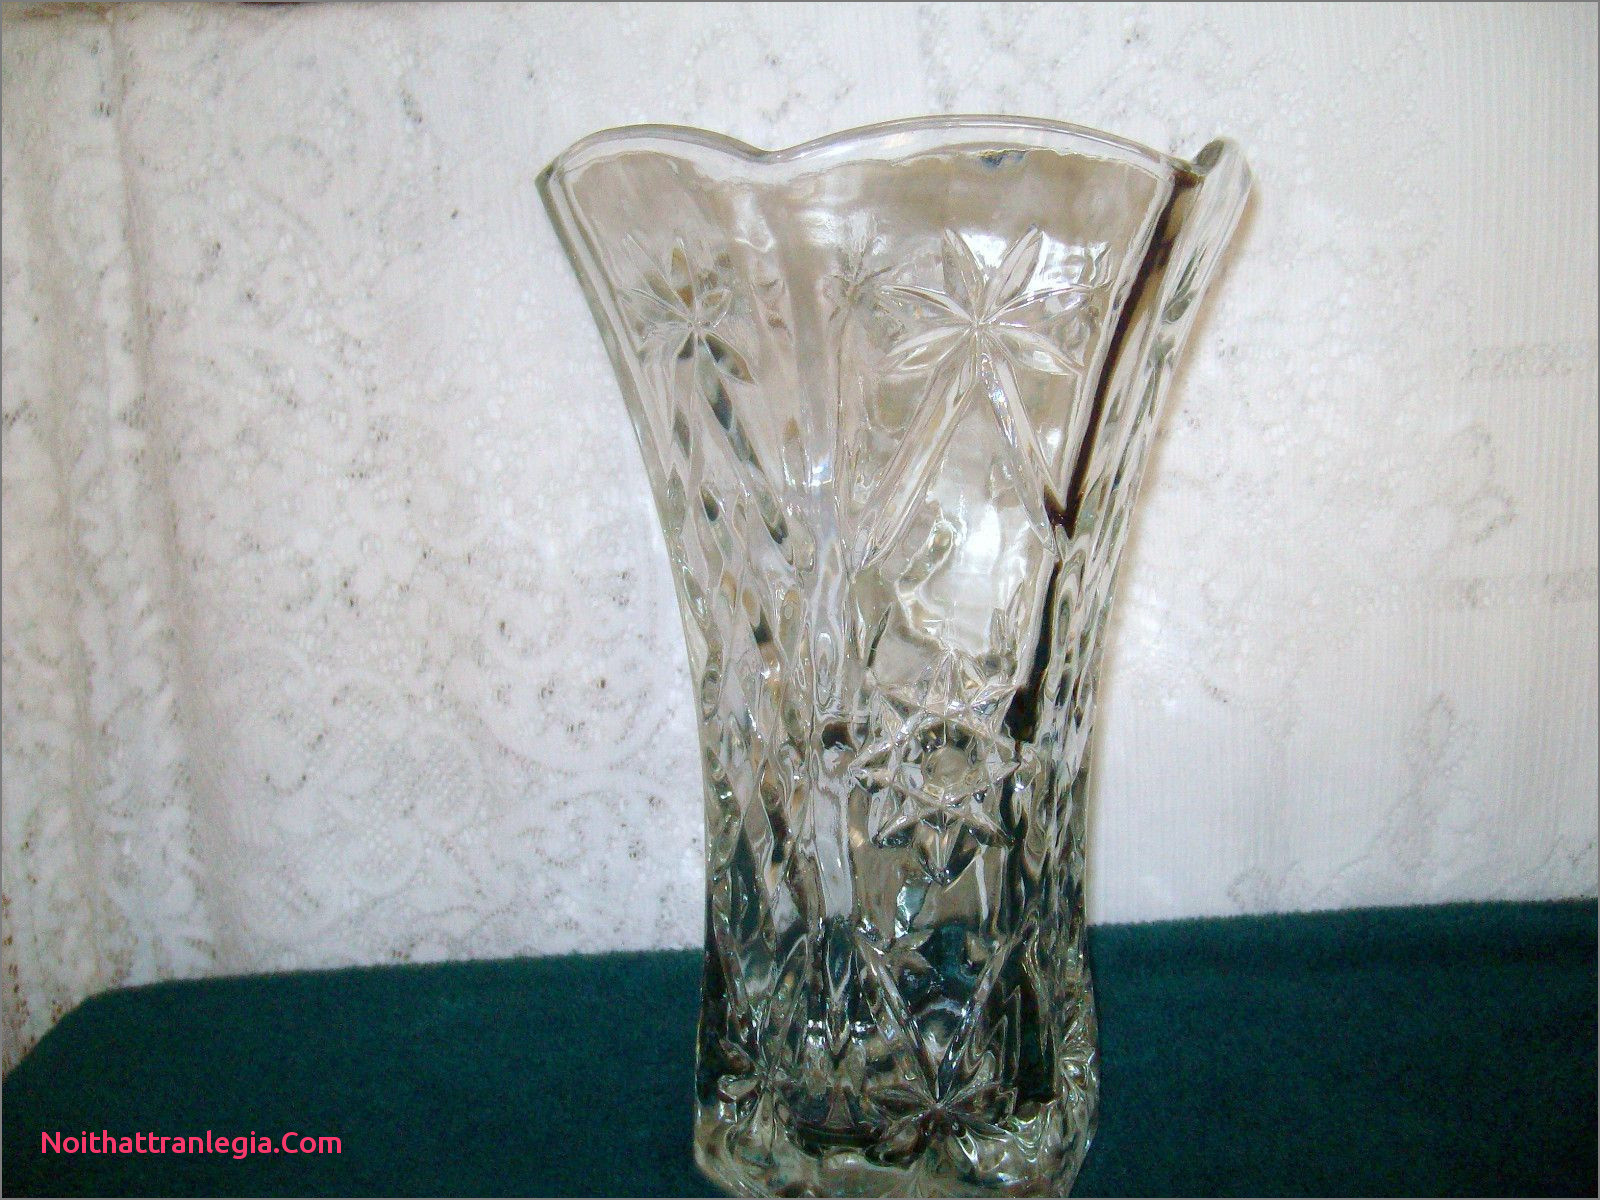 clear glass fish vase of 20 cut glass antique vase noithattranlegia vases design throughout vintage heavy depression cut glass vase 10 1 2 tall ruffled edges